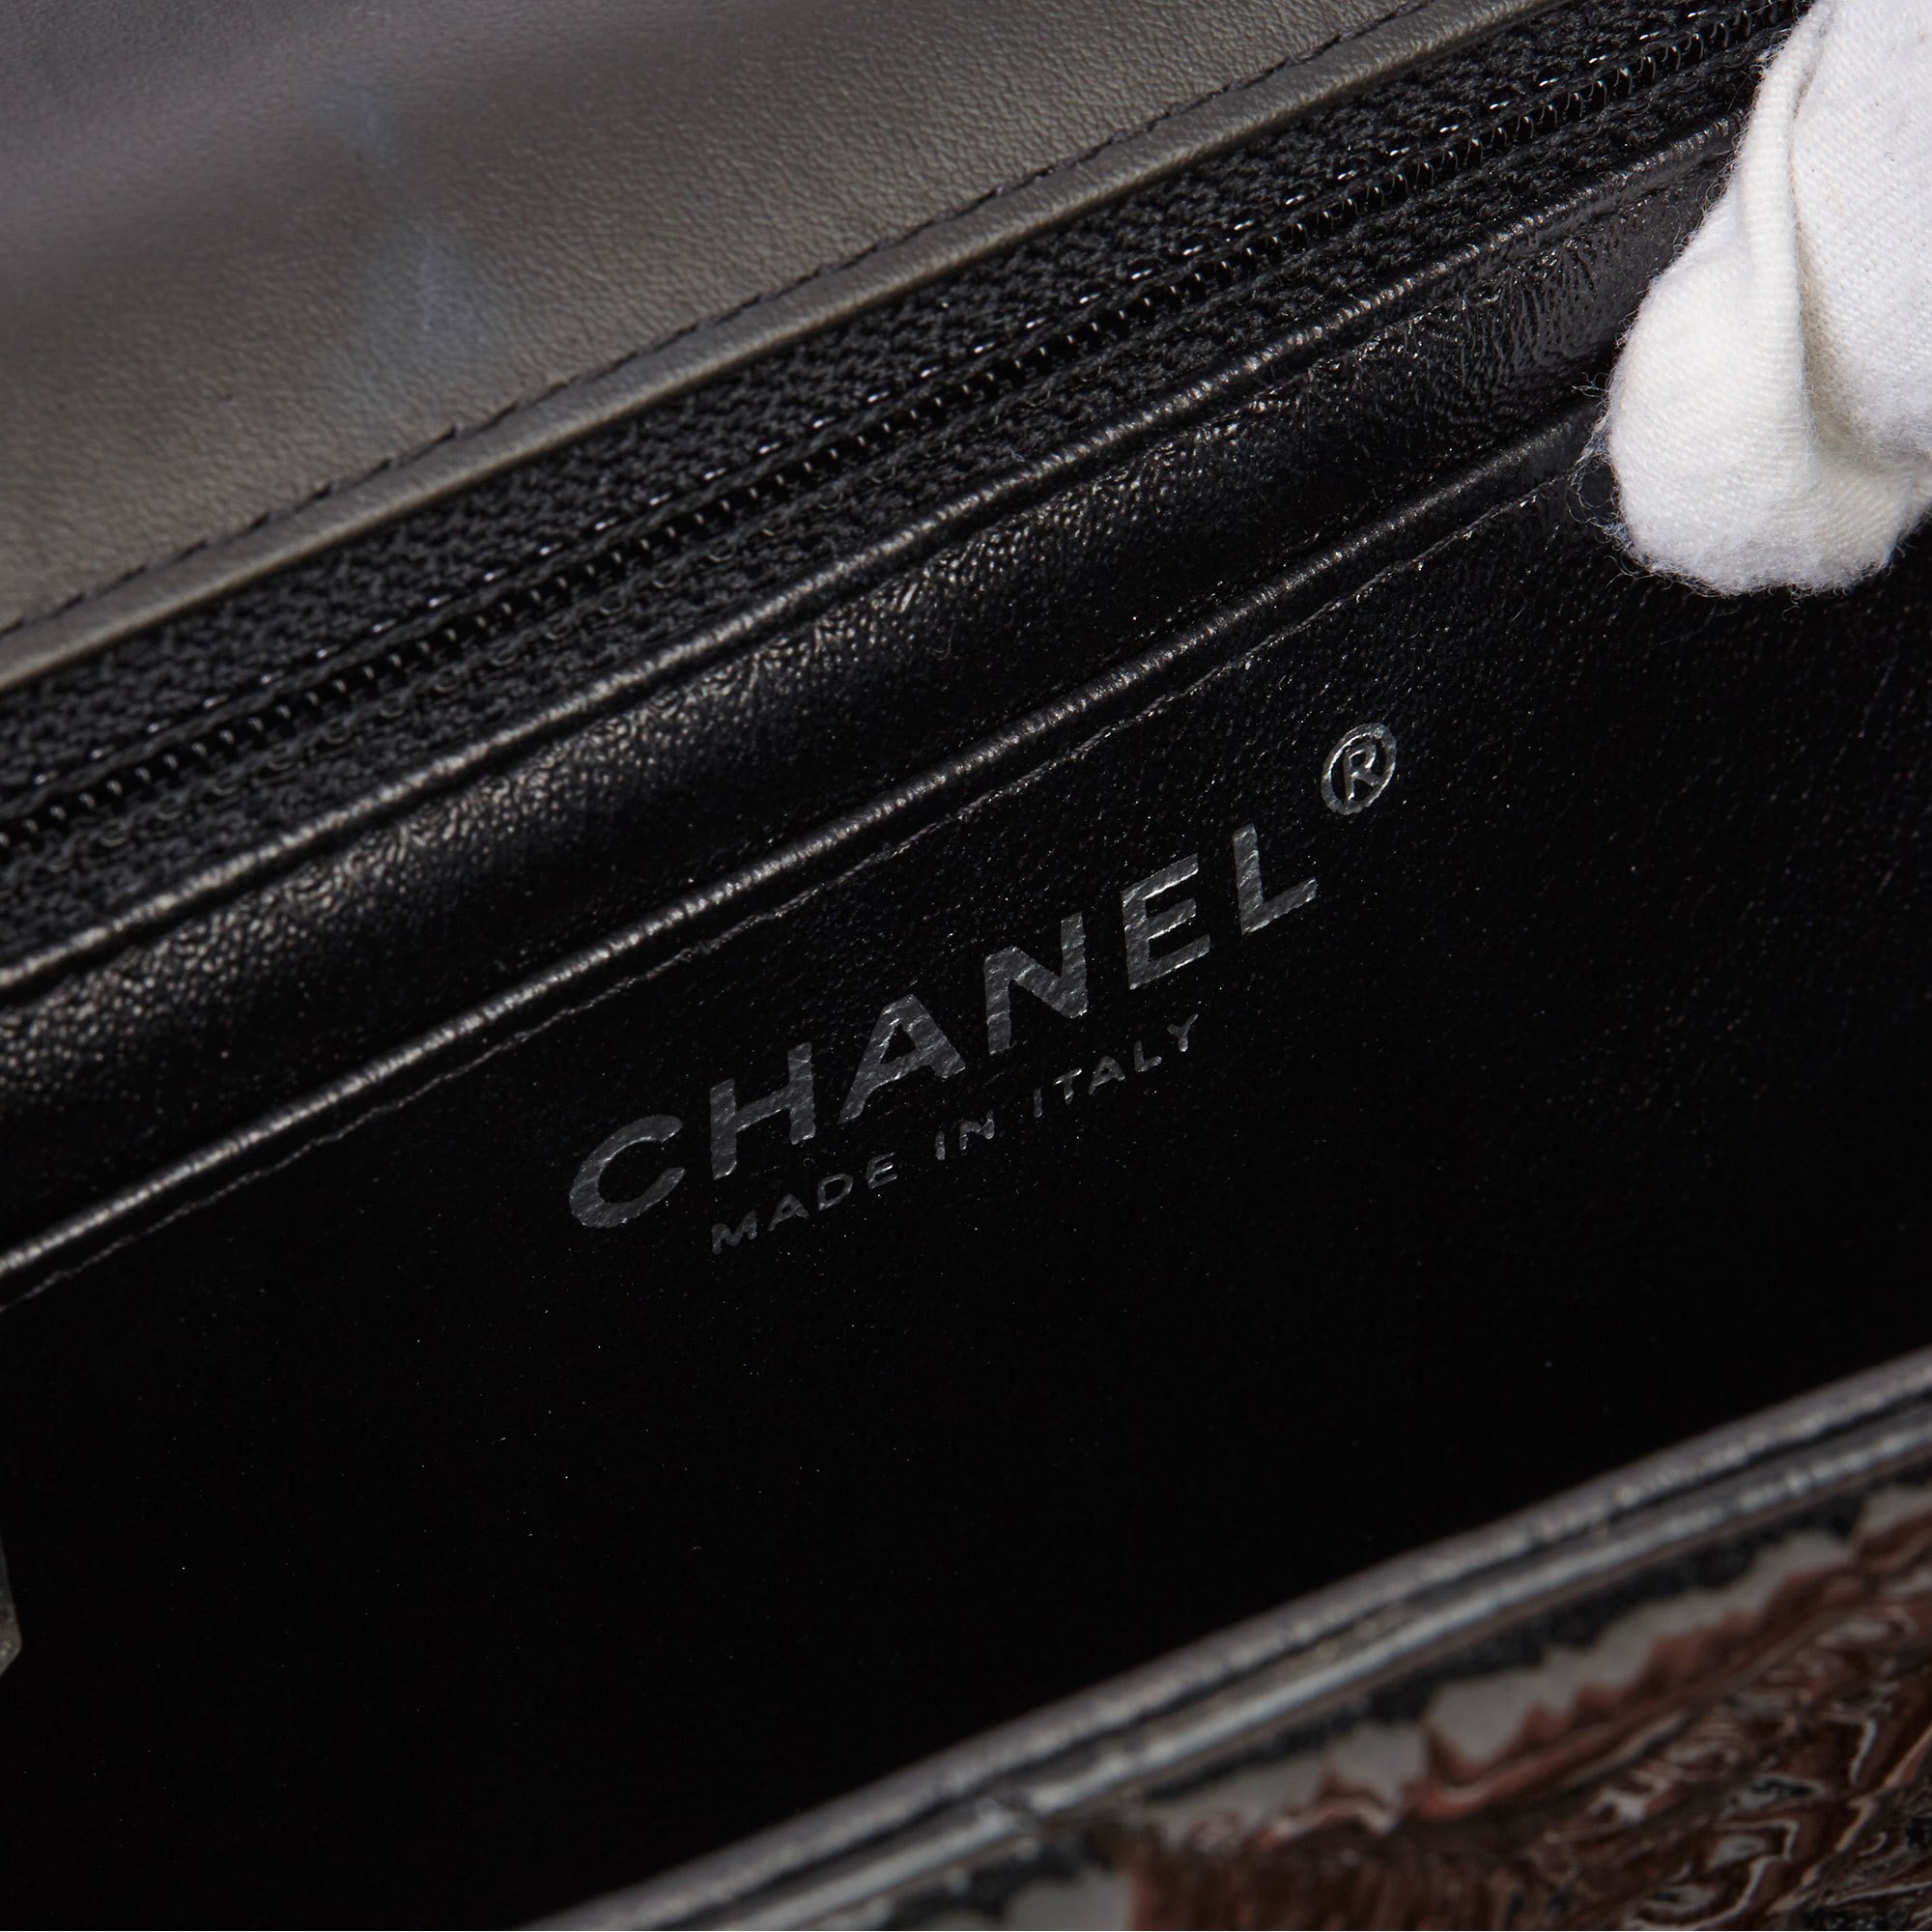 Chanel Black Chevron Quilted Crumpled Metallic Calfskin Leather SO Black Mini Flap Bag